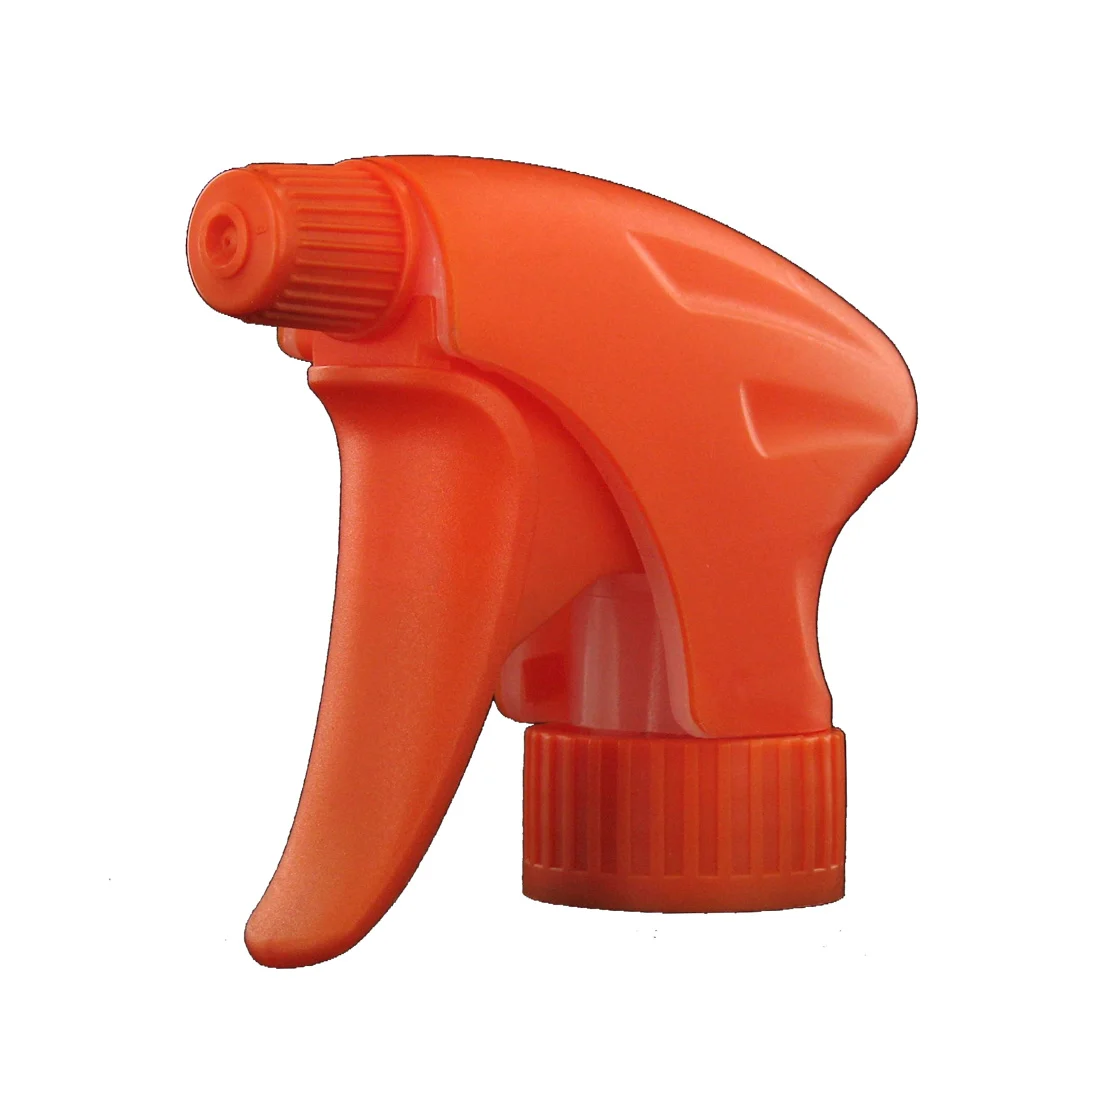 Duraspray Chemical Resistant Trigger Sprayer Red